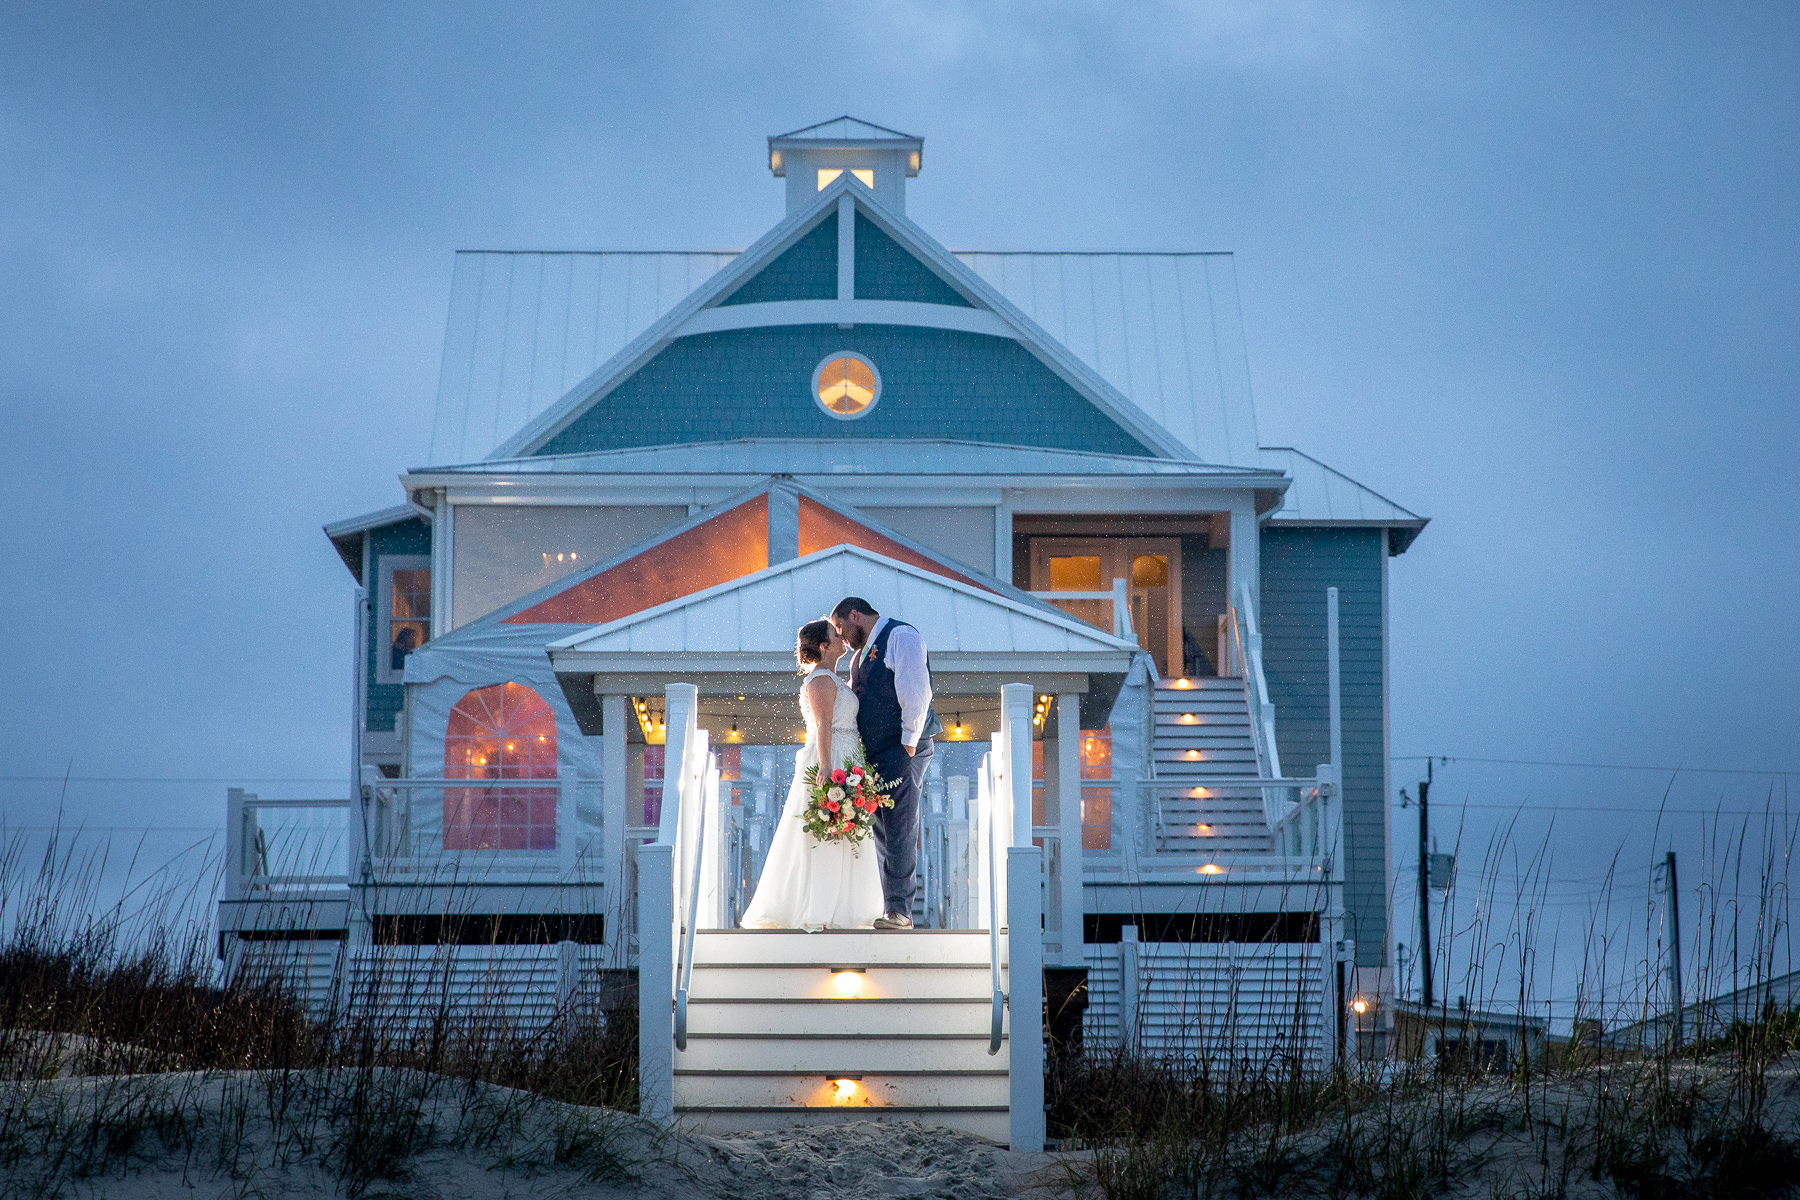 Beach house wedding -  sunset - twilight  - bride- groom - Wilmington NC Wedding Photographer - Wedding Photography - Sunset - Twilight - Colorful wedding photo style - Chris Lang Photography - Wedding Photo ideas 